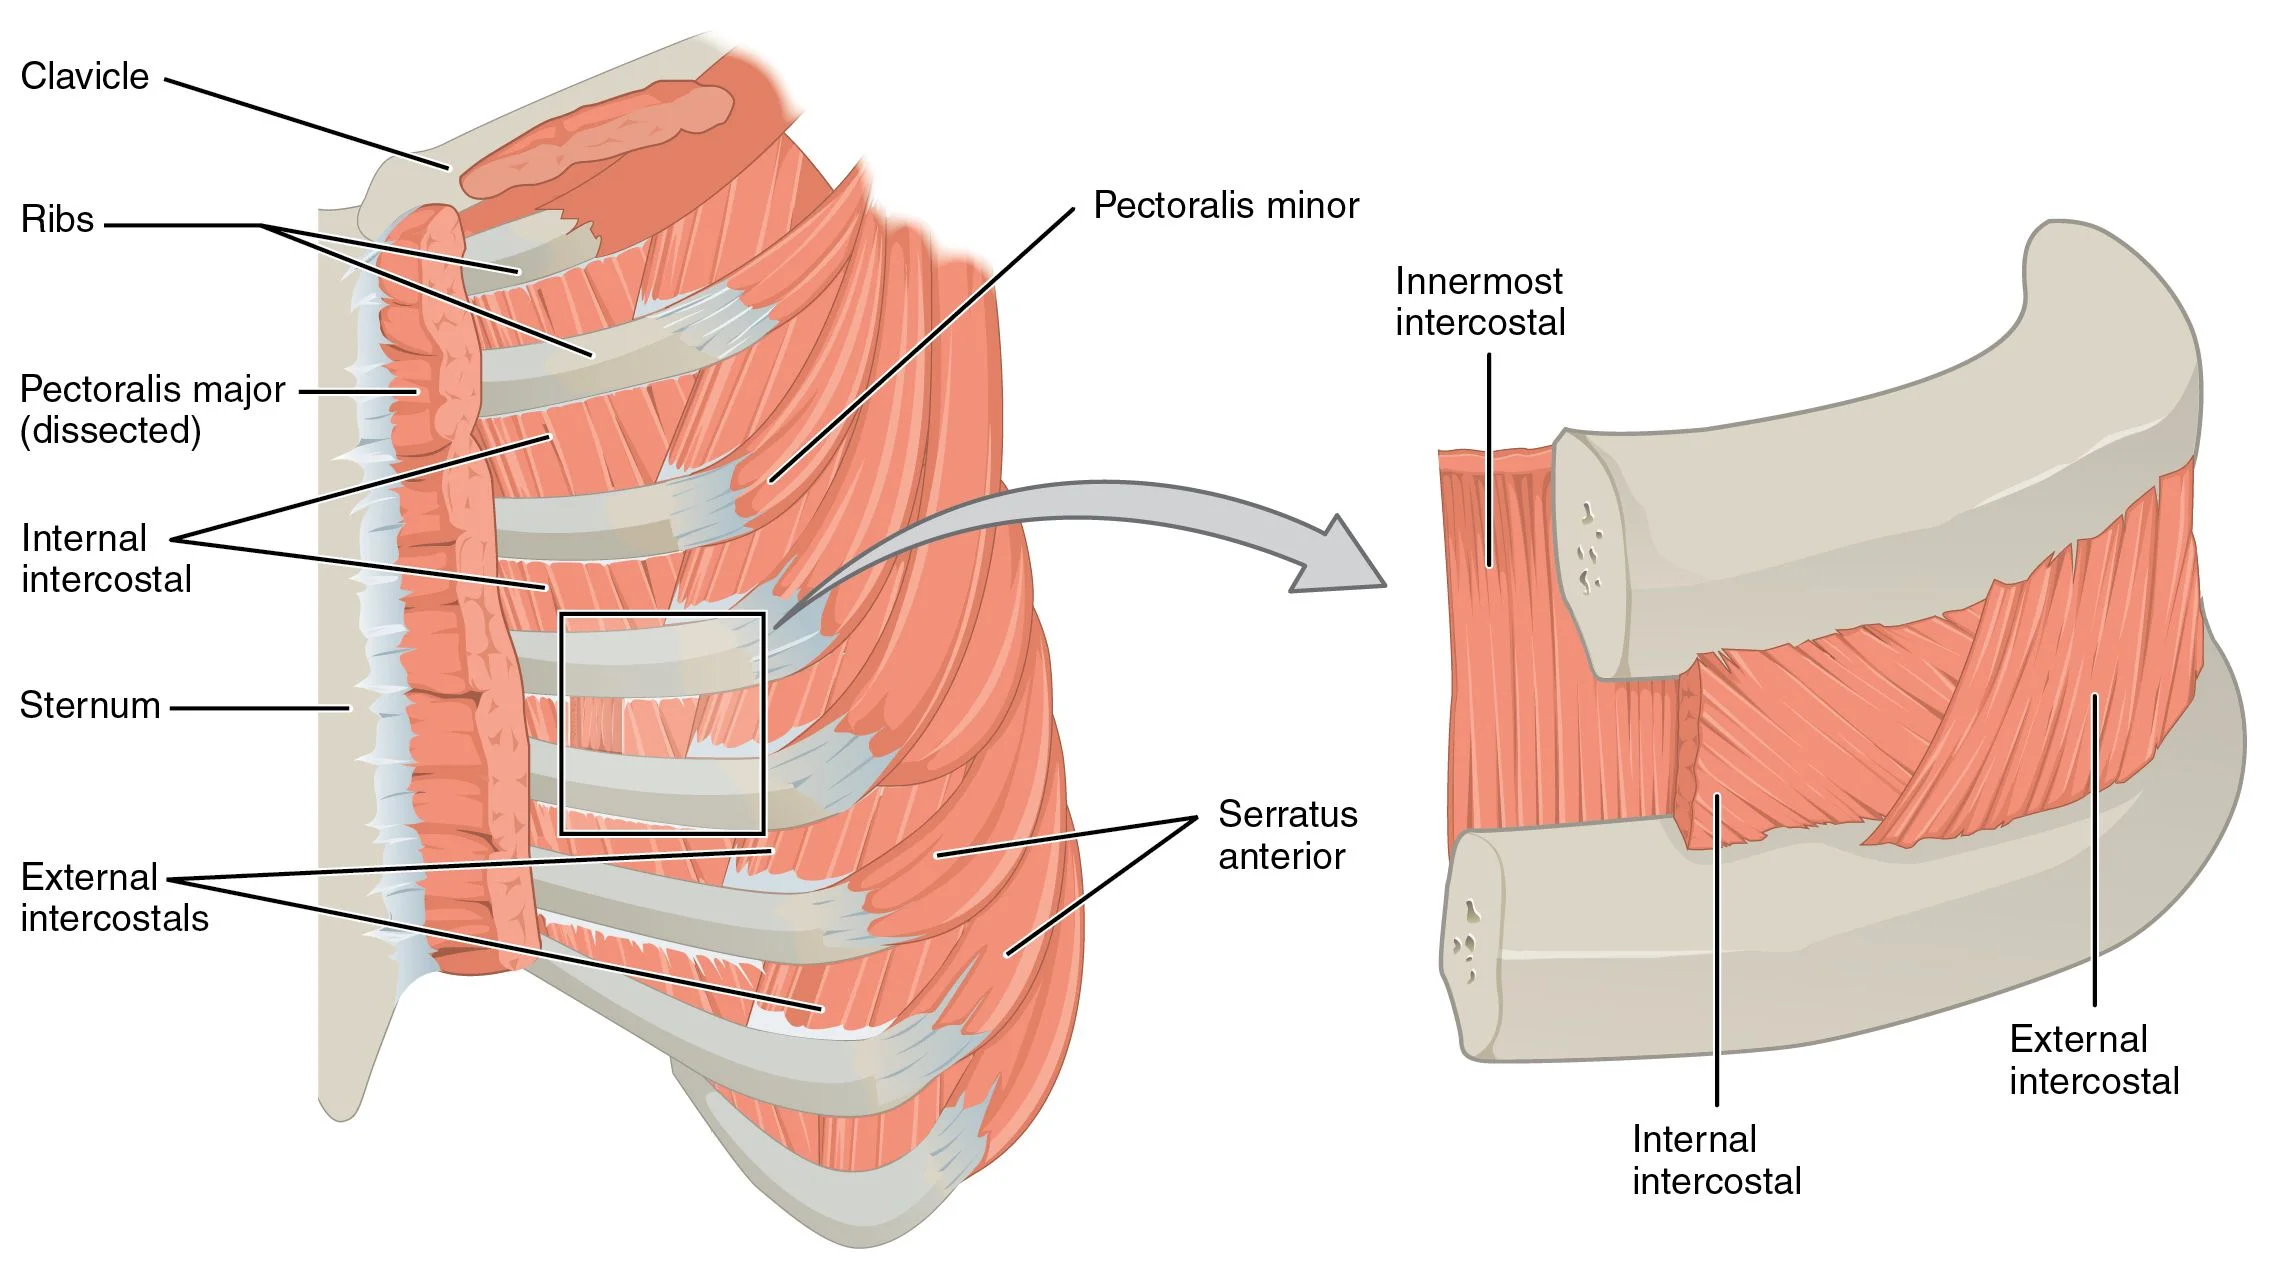 External intercostals - Pocket Anatomy